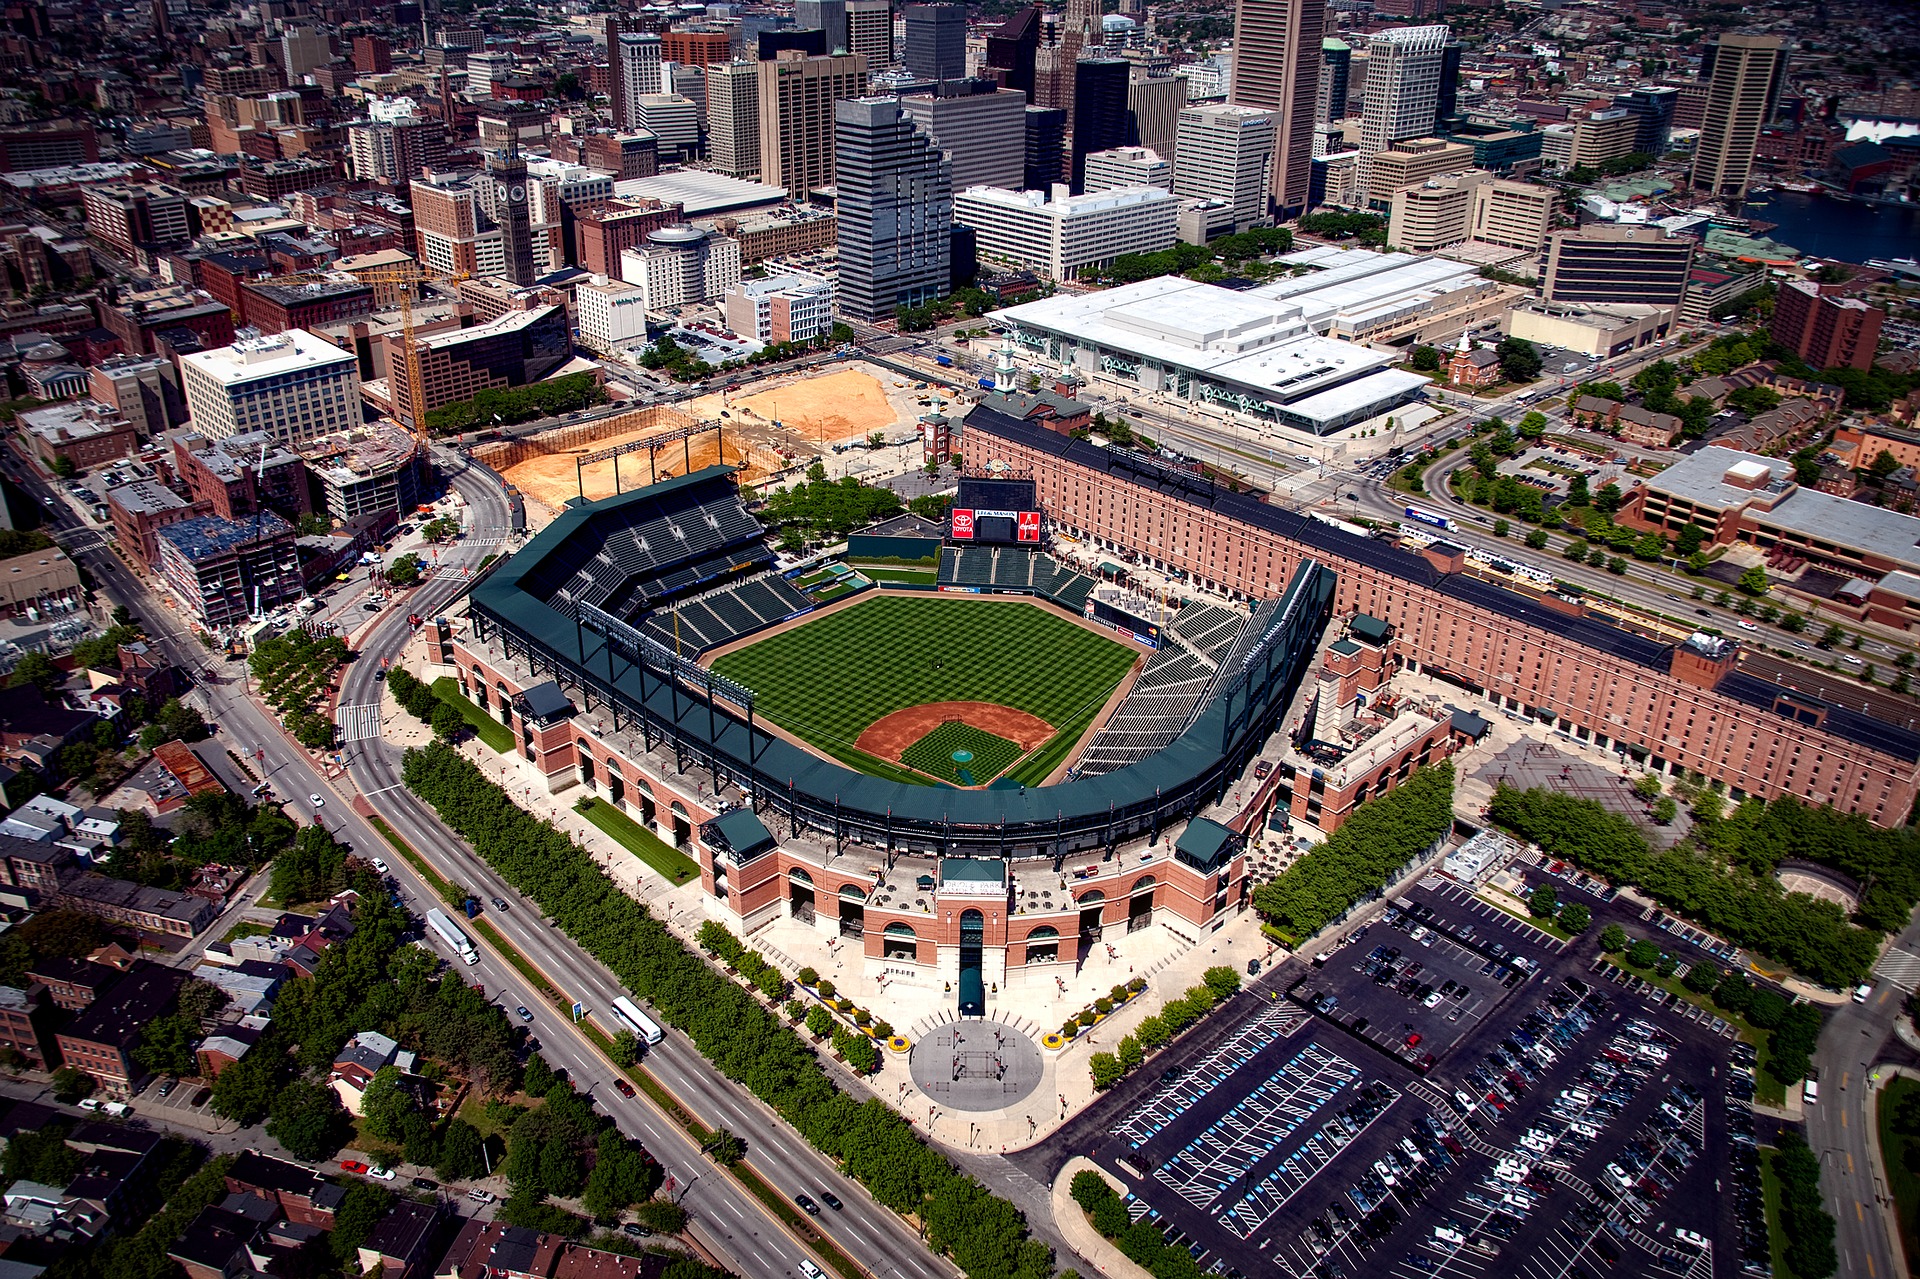 Verenigde-Staten-Baltimore-cruise-haven-stad-camden-yards-honkbal